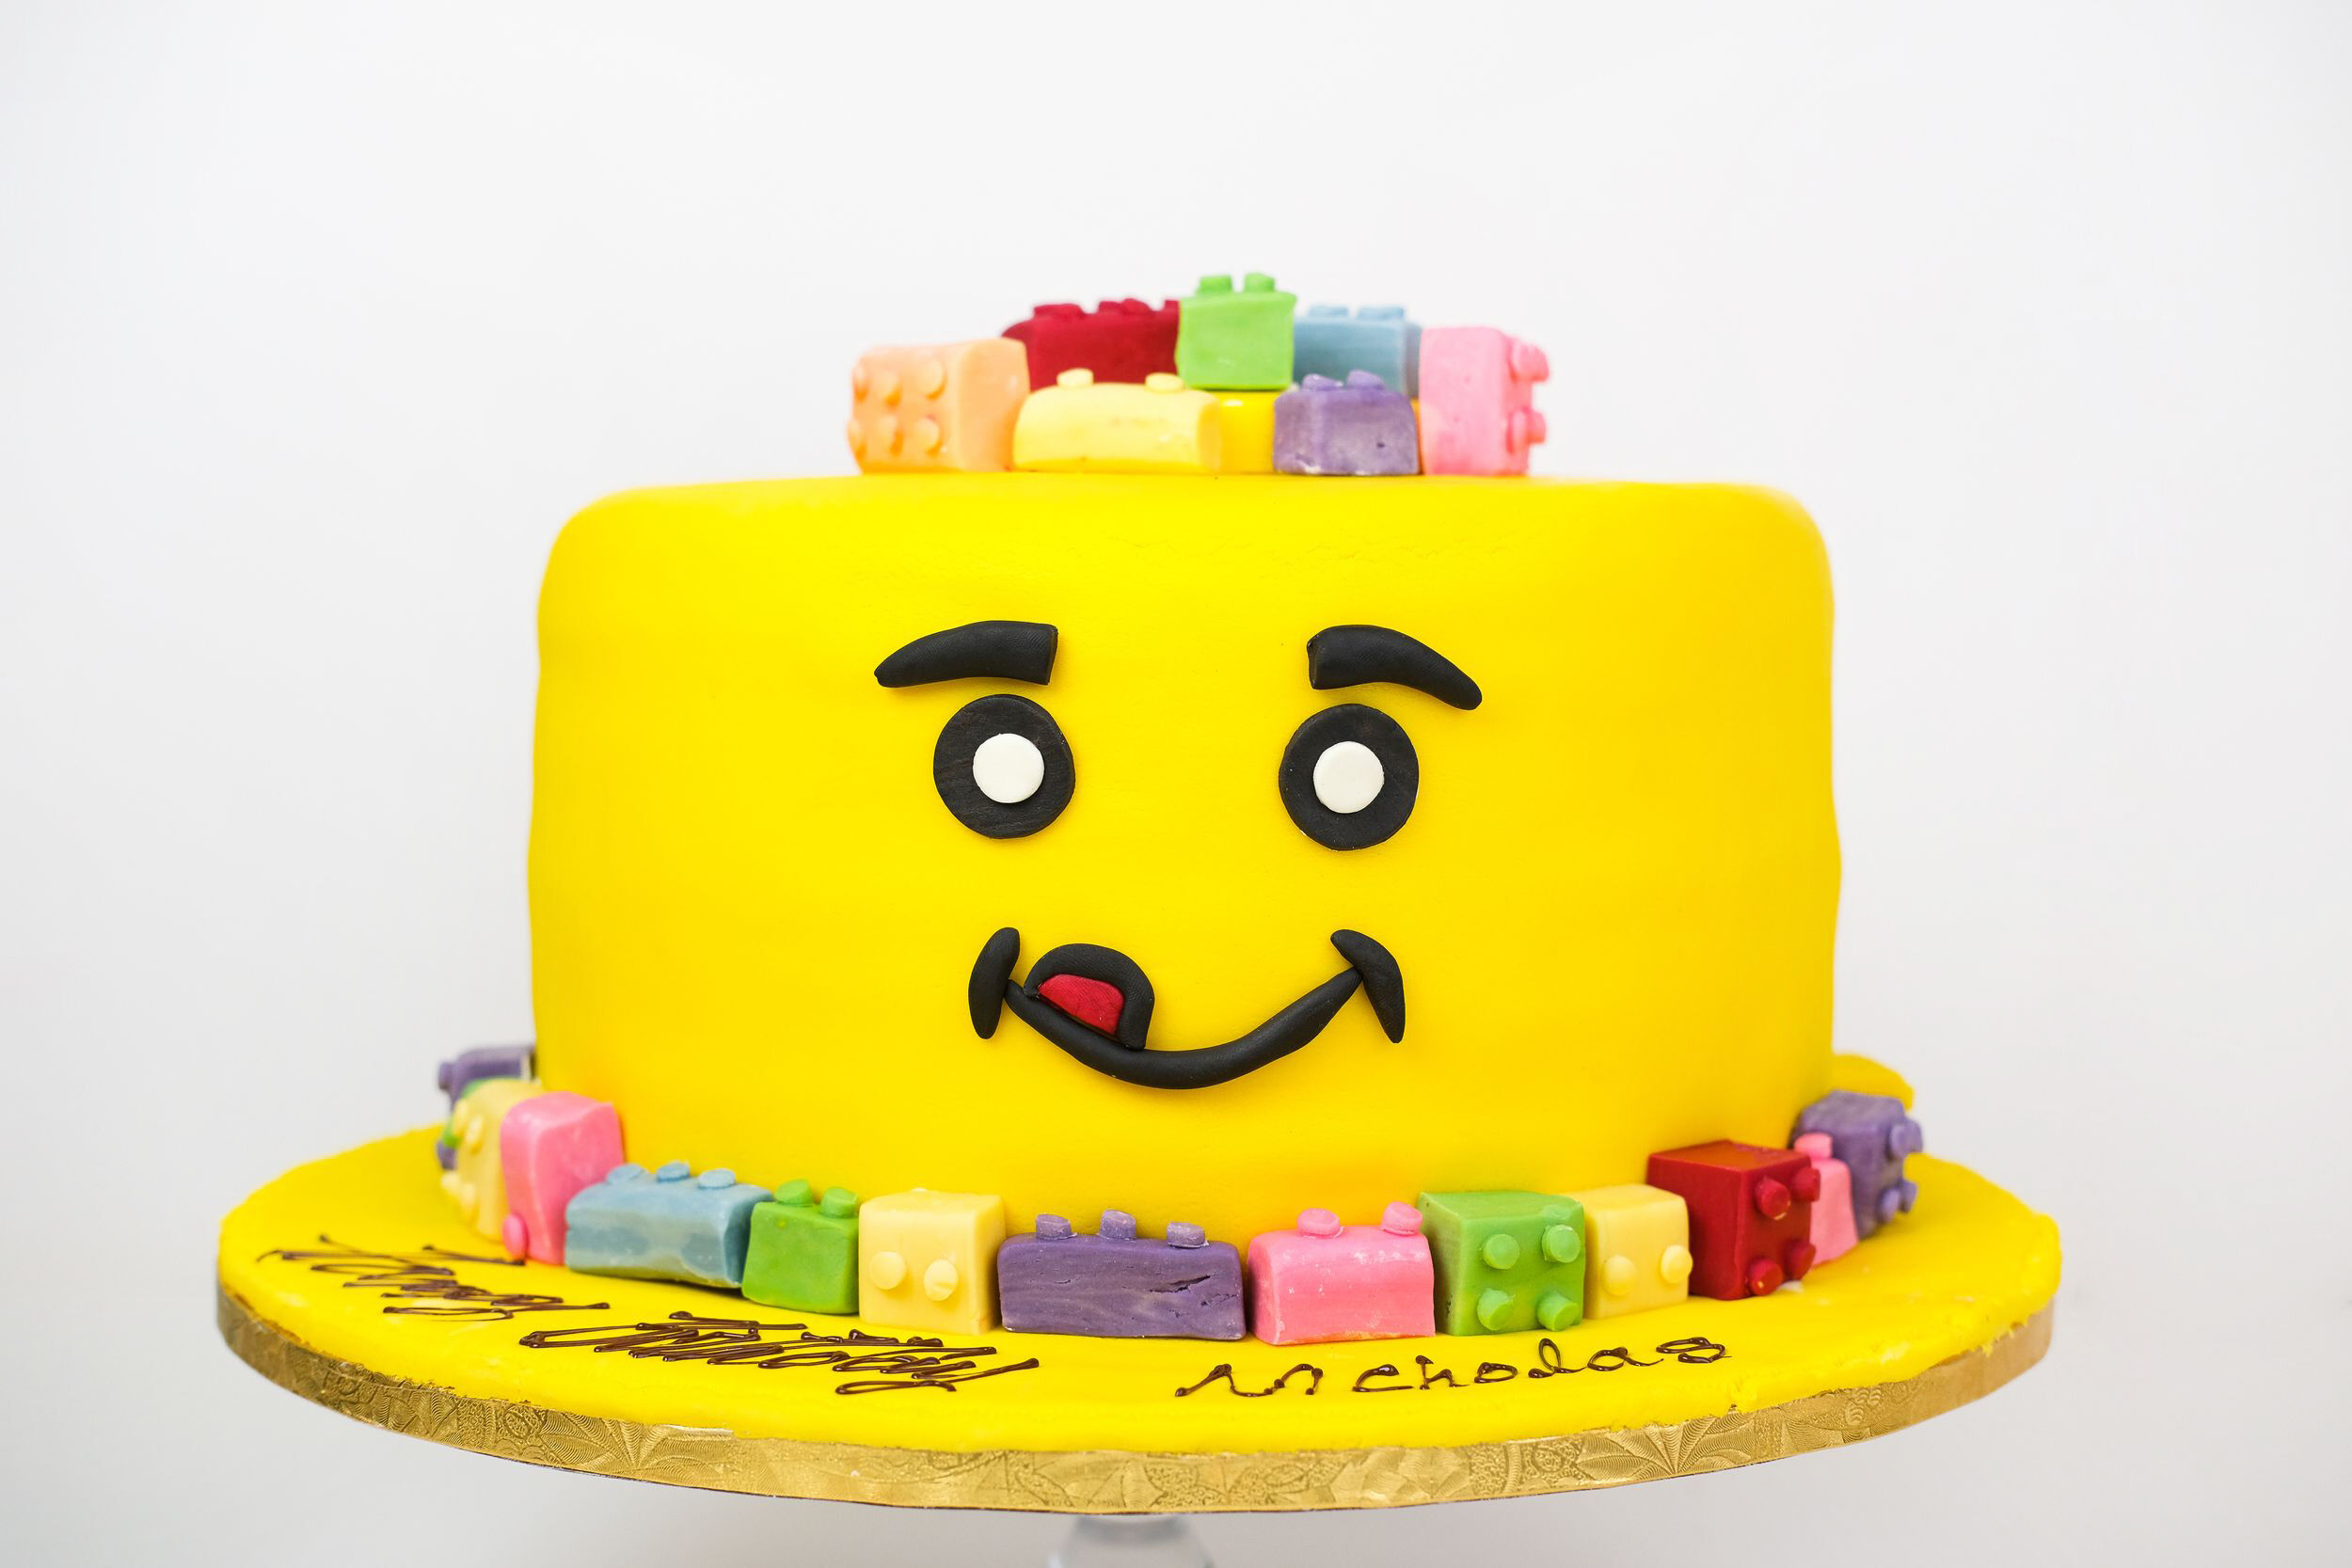 Lego Birthday Cake - Decorated Cake by Pattie Cakes - CakesDecor